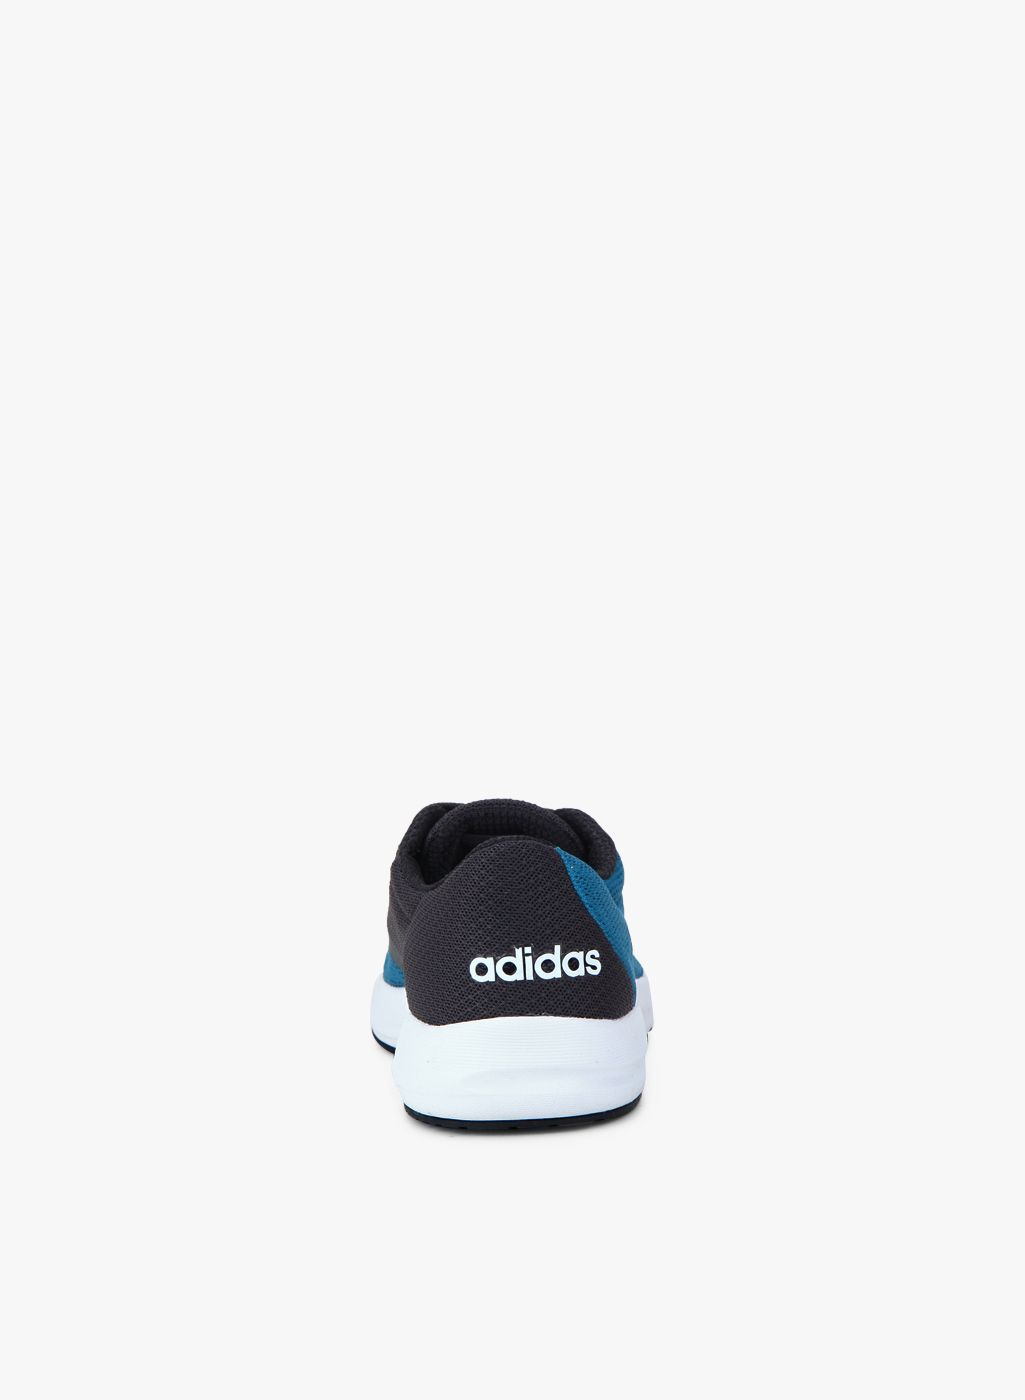 adidas cyberg running shoes